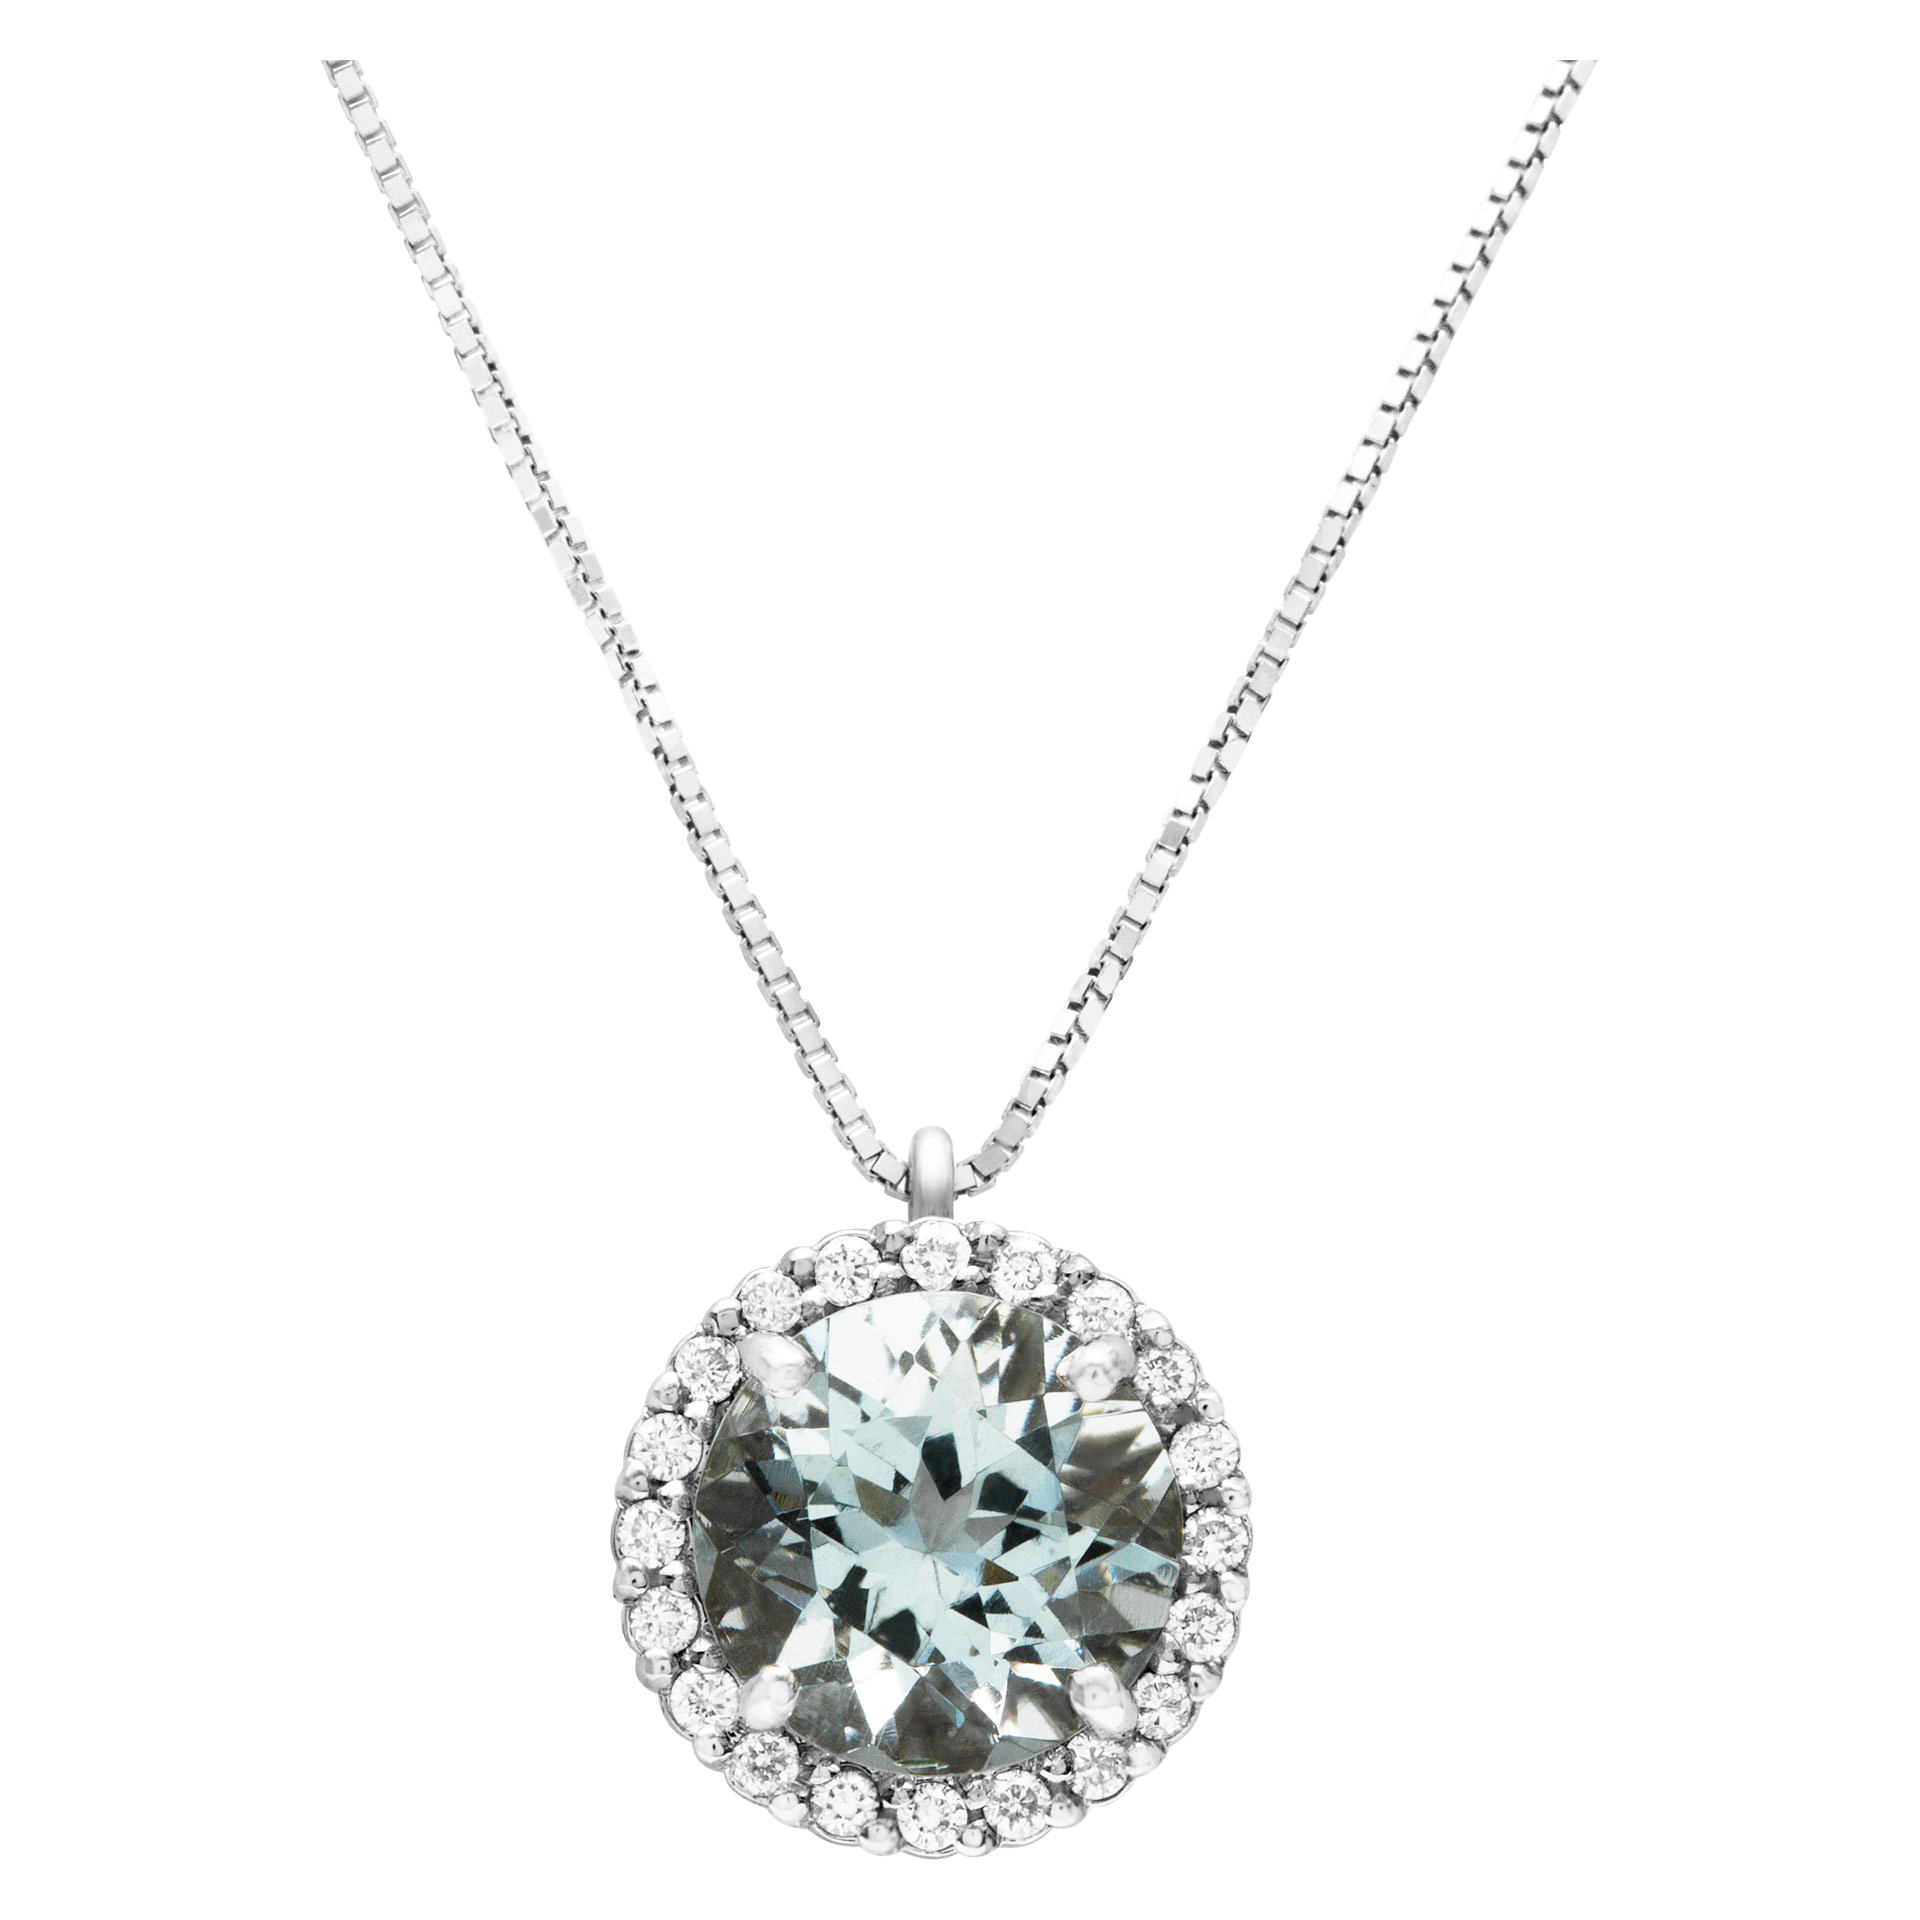 Round Aquamarine pendant with diamond accents